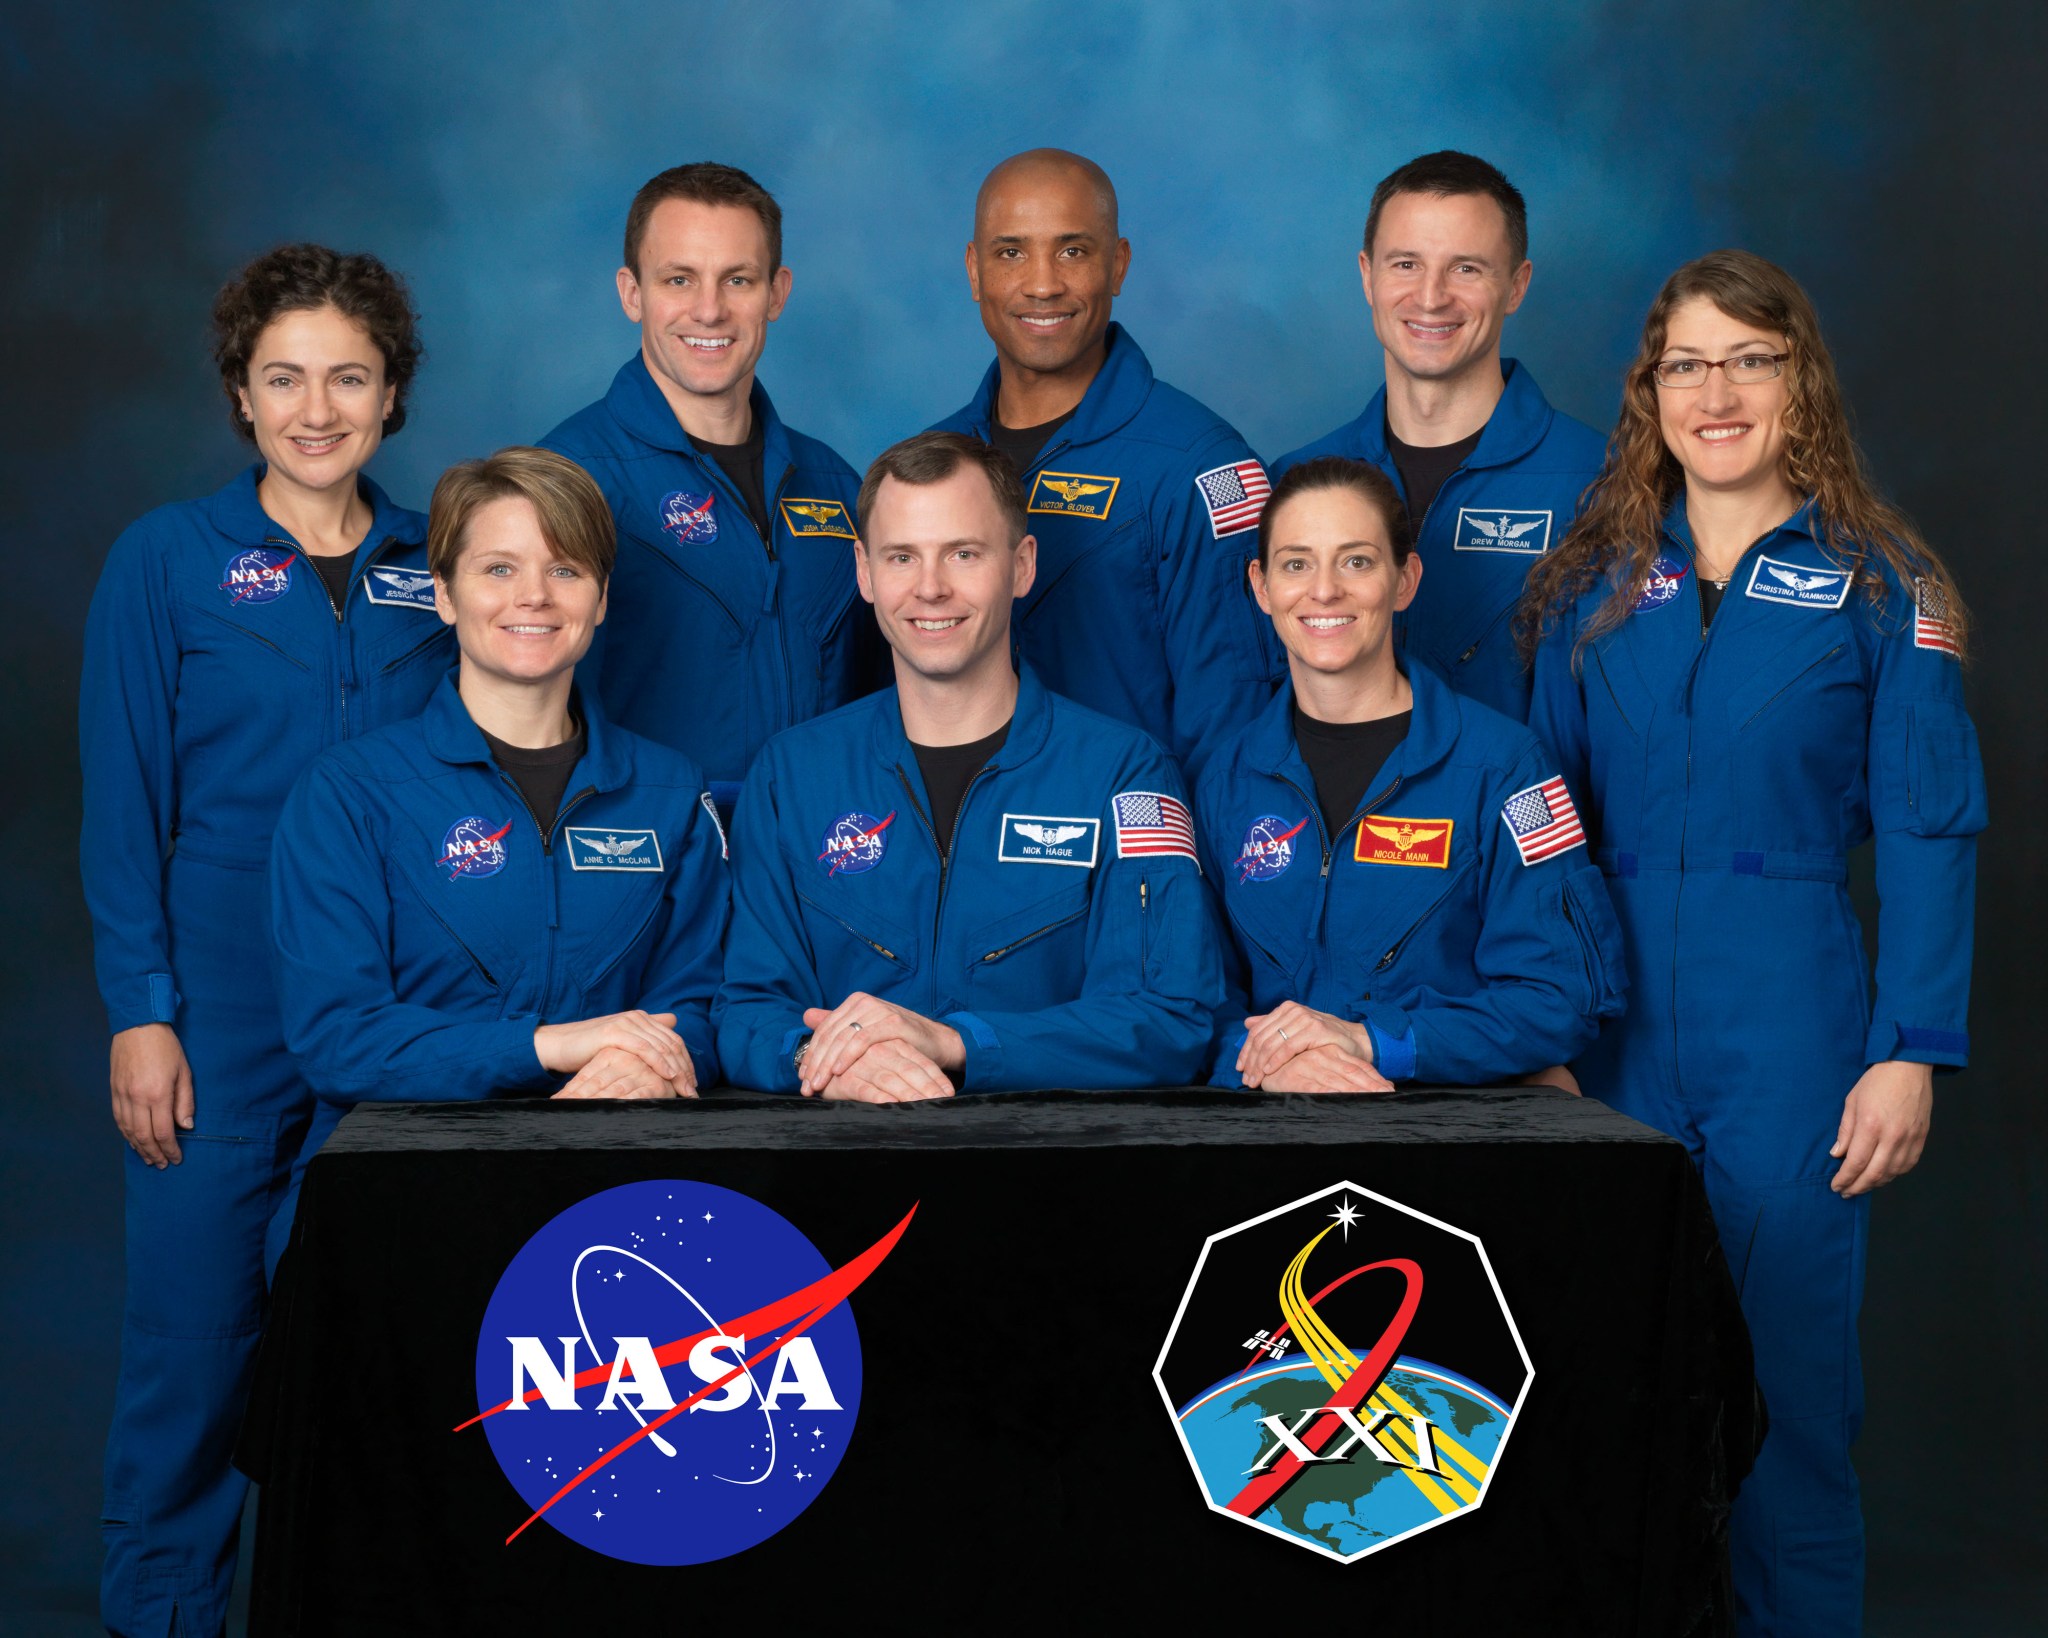 2013 class of NASA astronauts